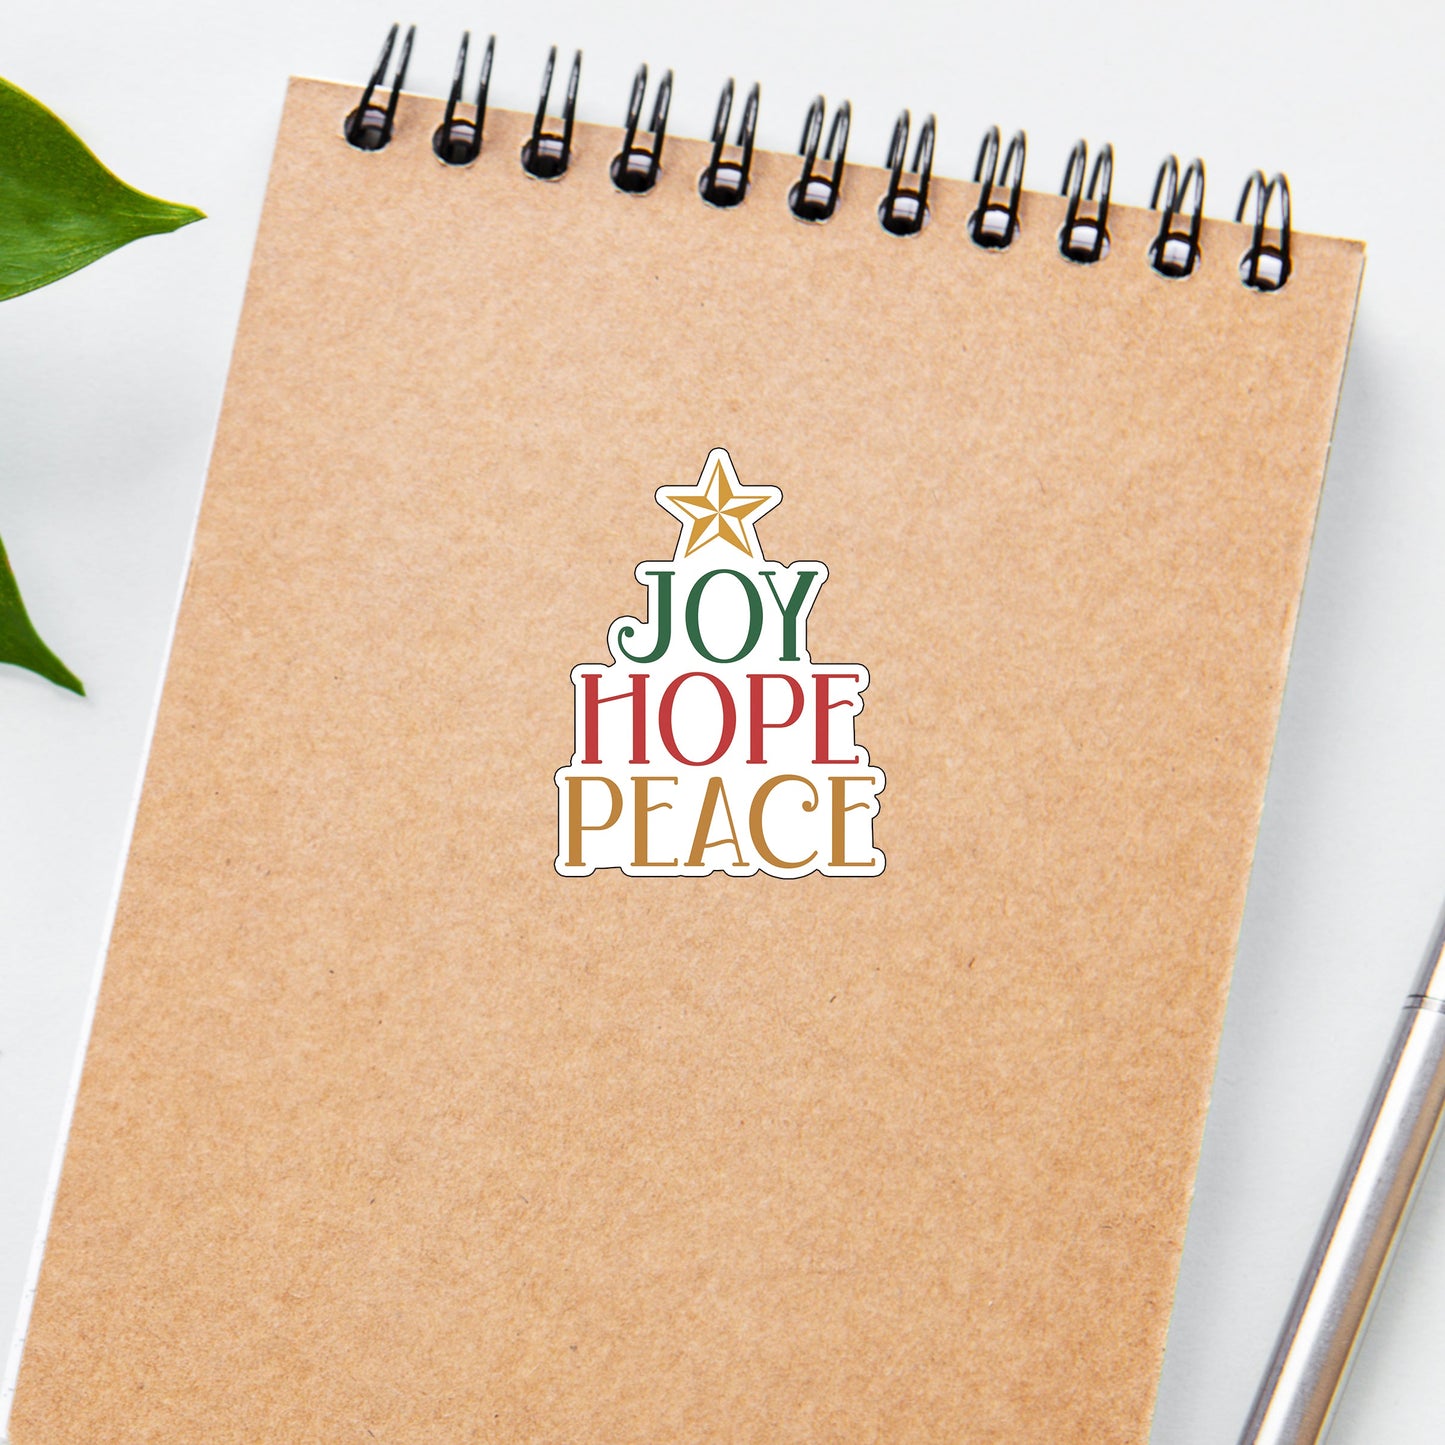 joy-peace-hope-sticker Sticker